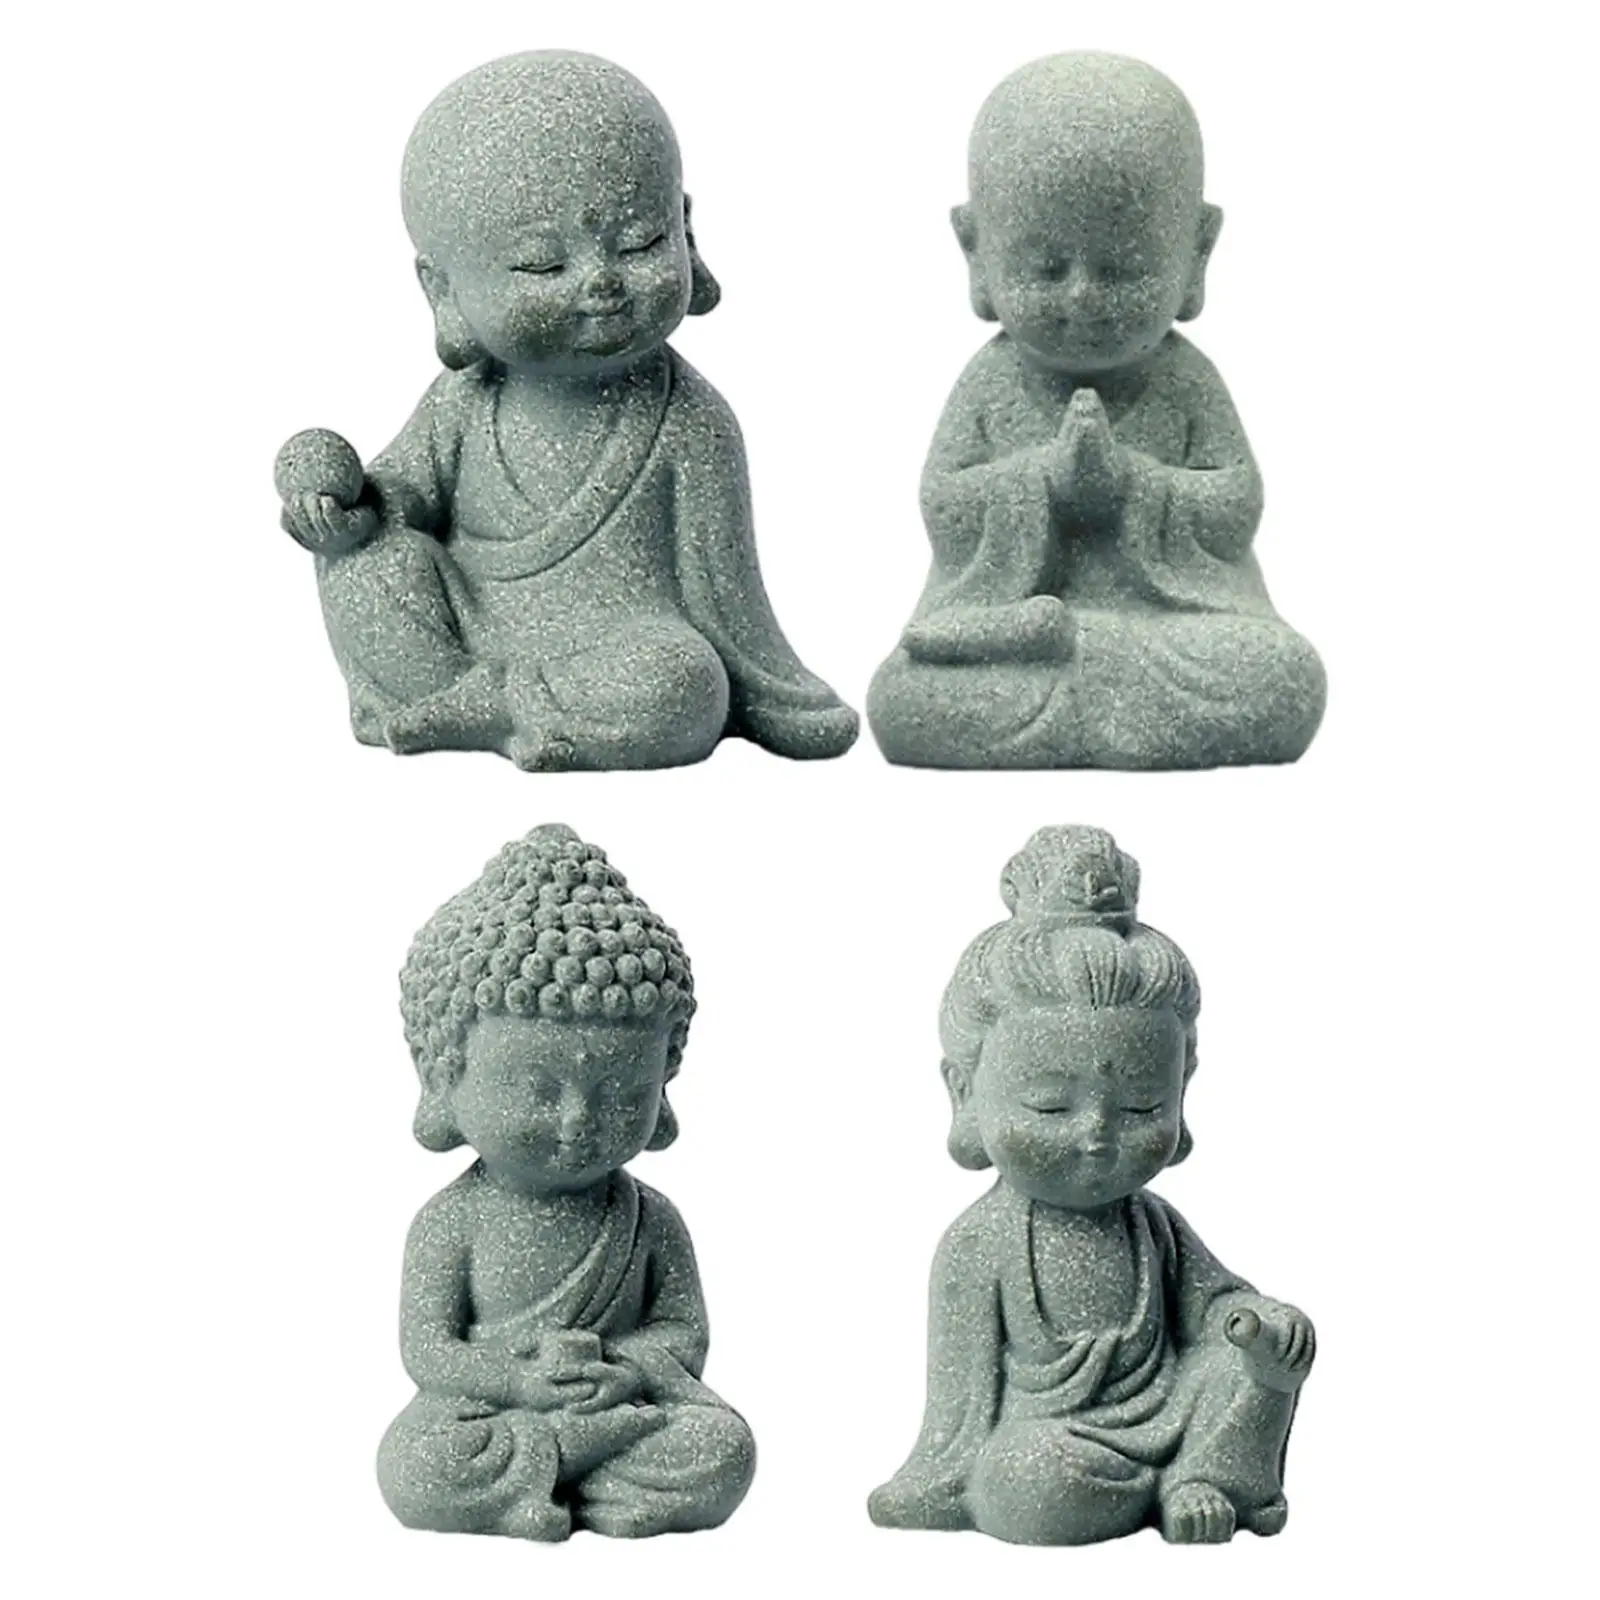 Resin Buddha Statue Meditation Ornament Handcrafted Meditating Figurines Sitting Buddha Statue for Home Porch Desktop Shop Hotel